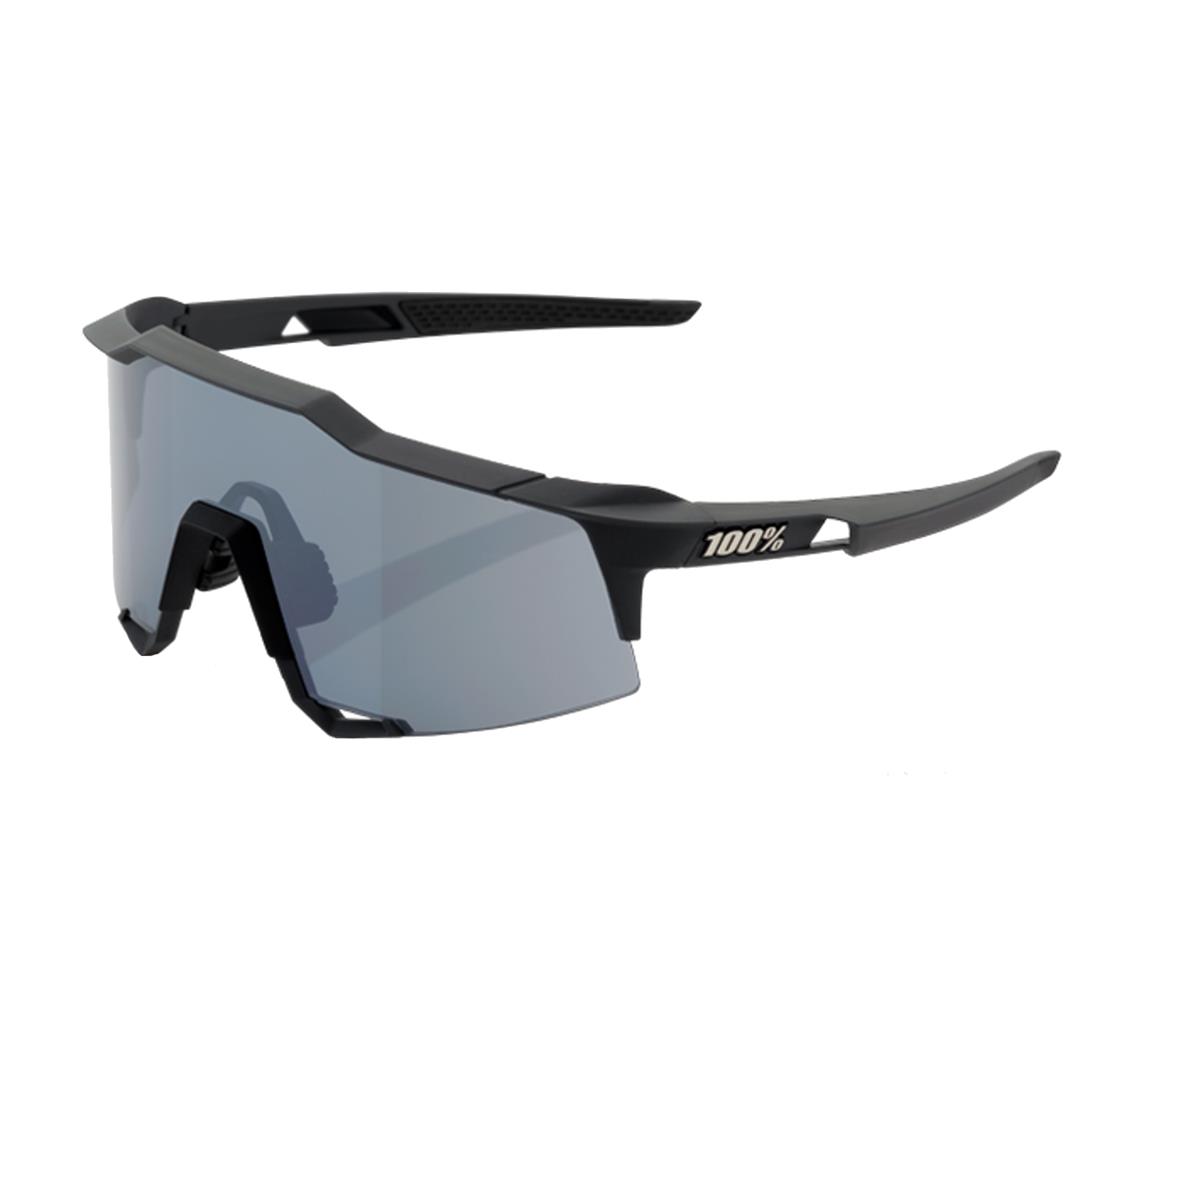 100% MTB Sport Glasses The Speedcraft Tall Soft Tact Black, Smoke Lens